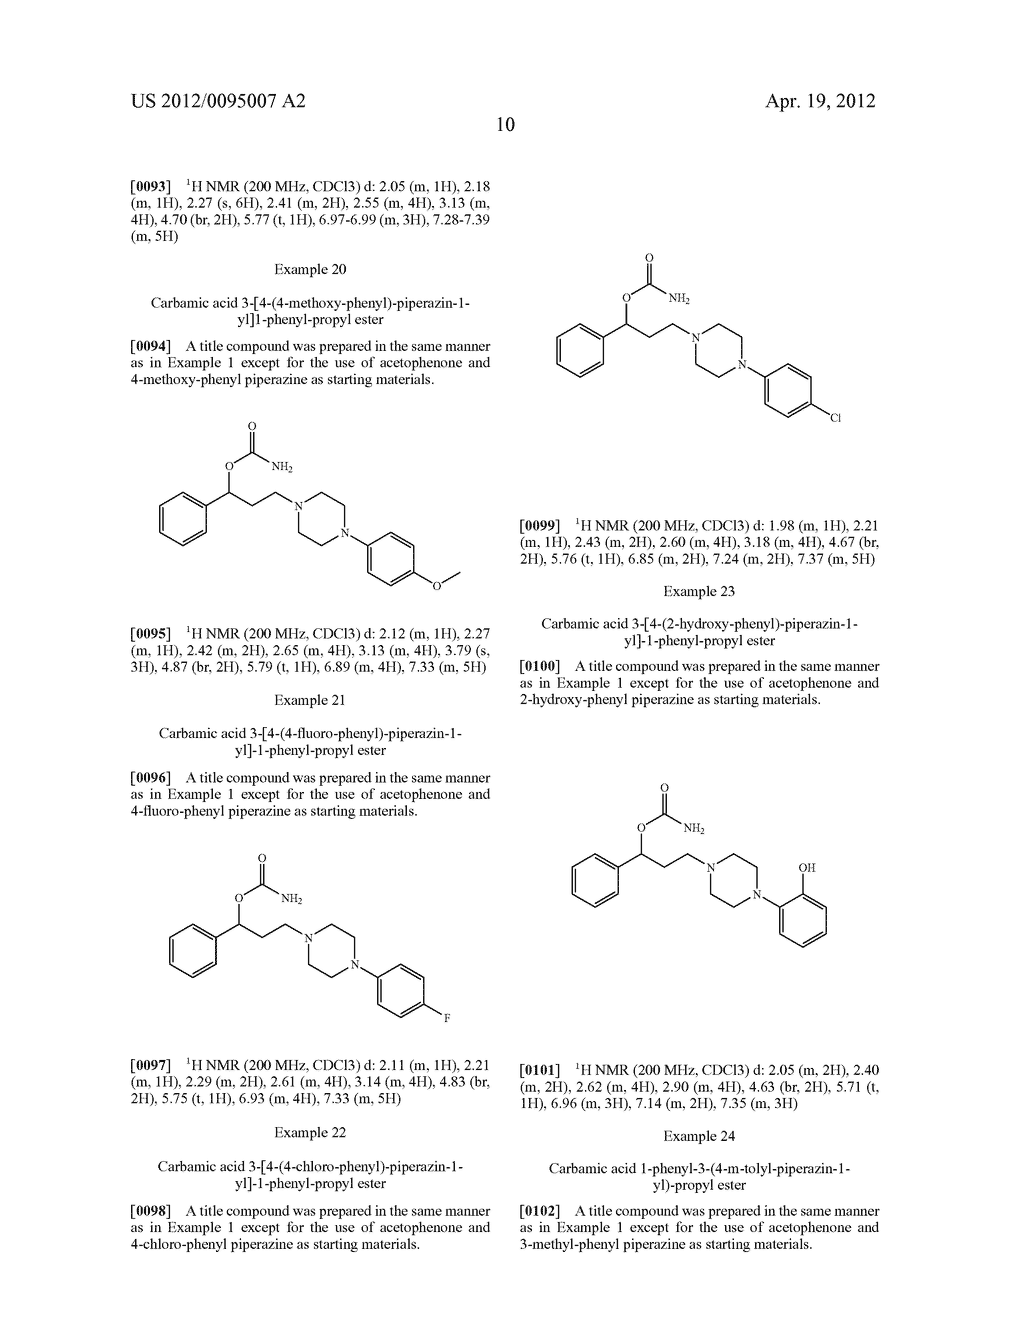 CARBAMOYLOXY ARYLALKAN ARYLPIPERAZINE ANALGESICS - diagram, schematic, and image 11